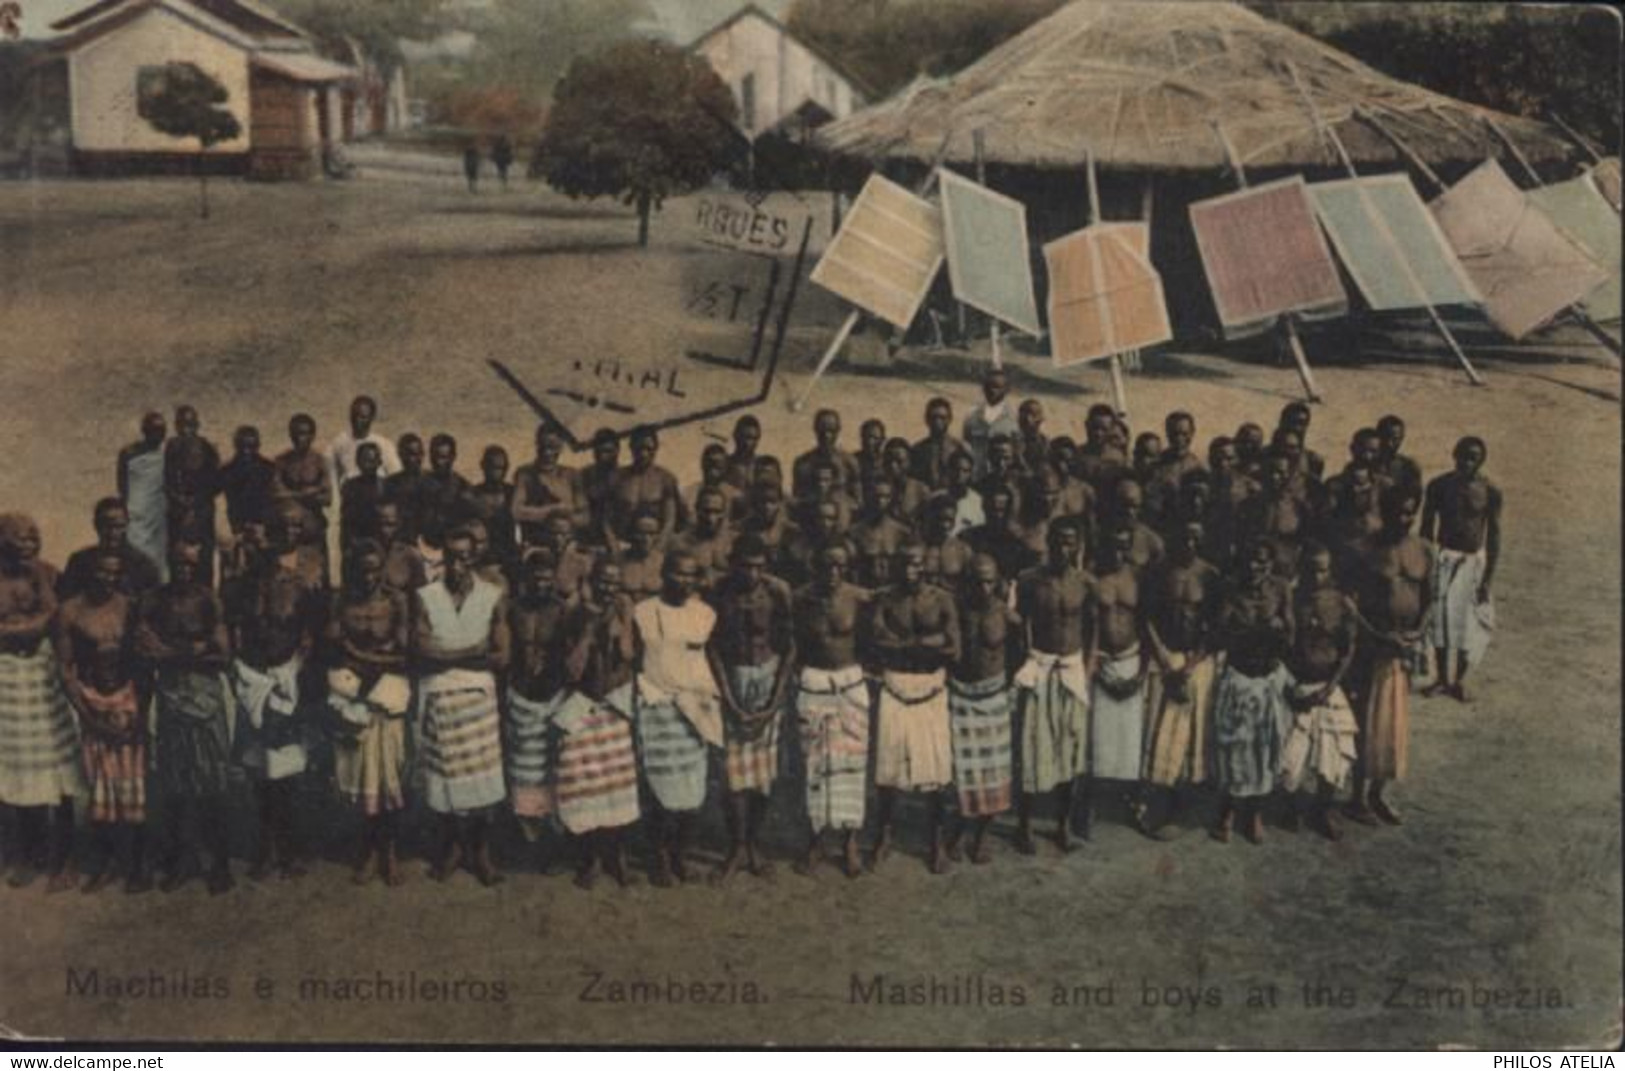 Afrique CPA CP Mozambique Machilas E Machileiros Zambezia Mashillas And Boys At The Zambezia CAD 19 8 1910 - Mosambik